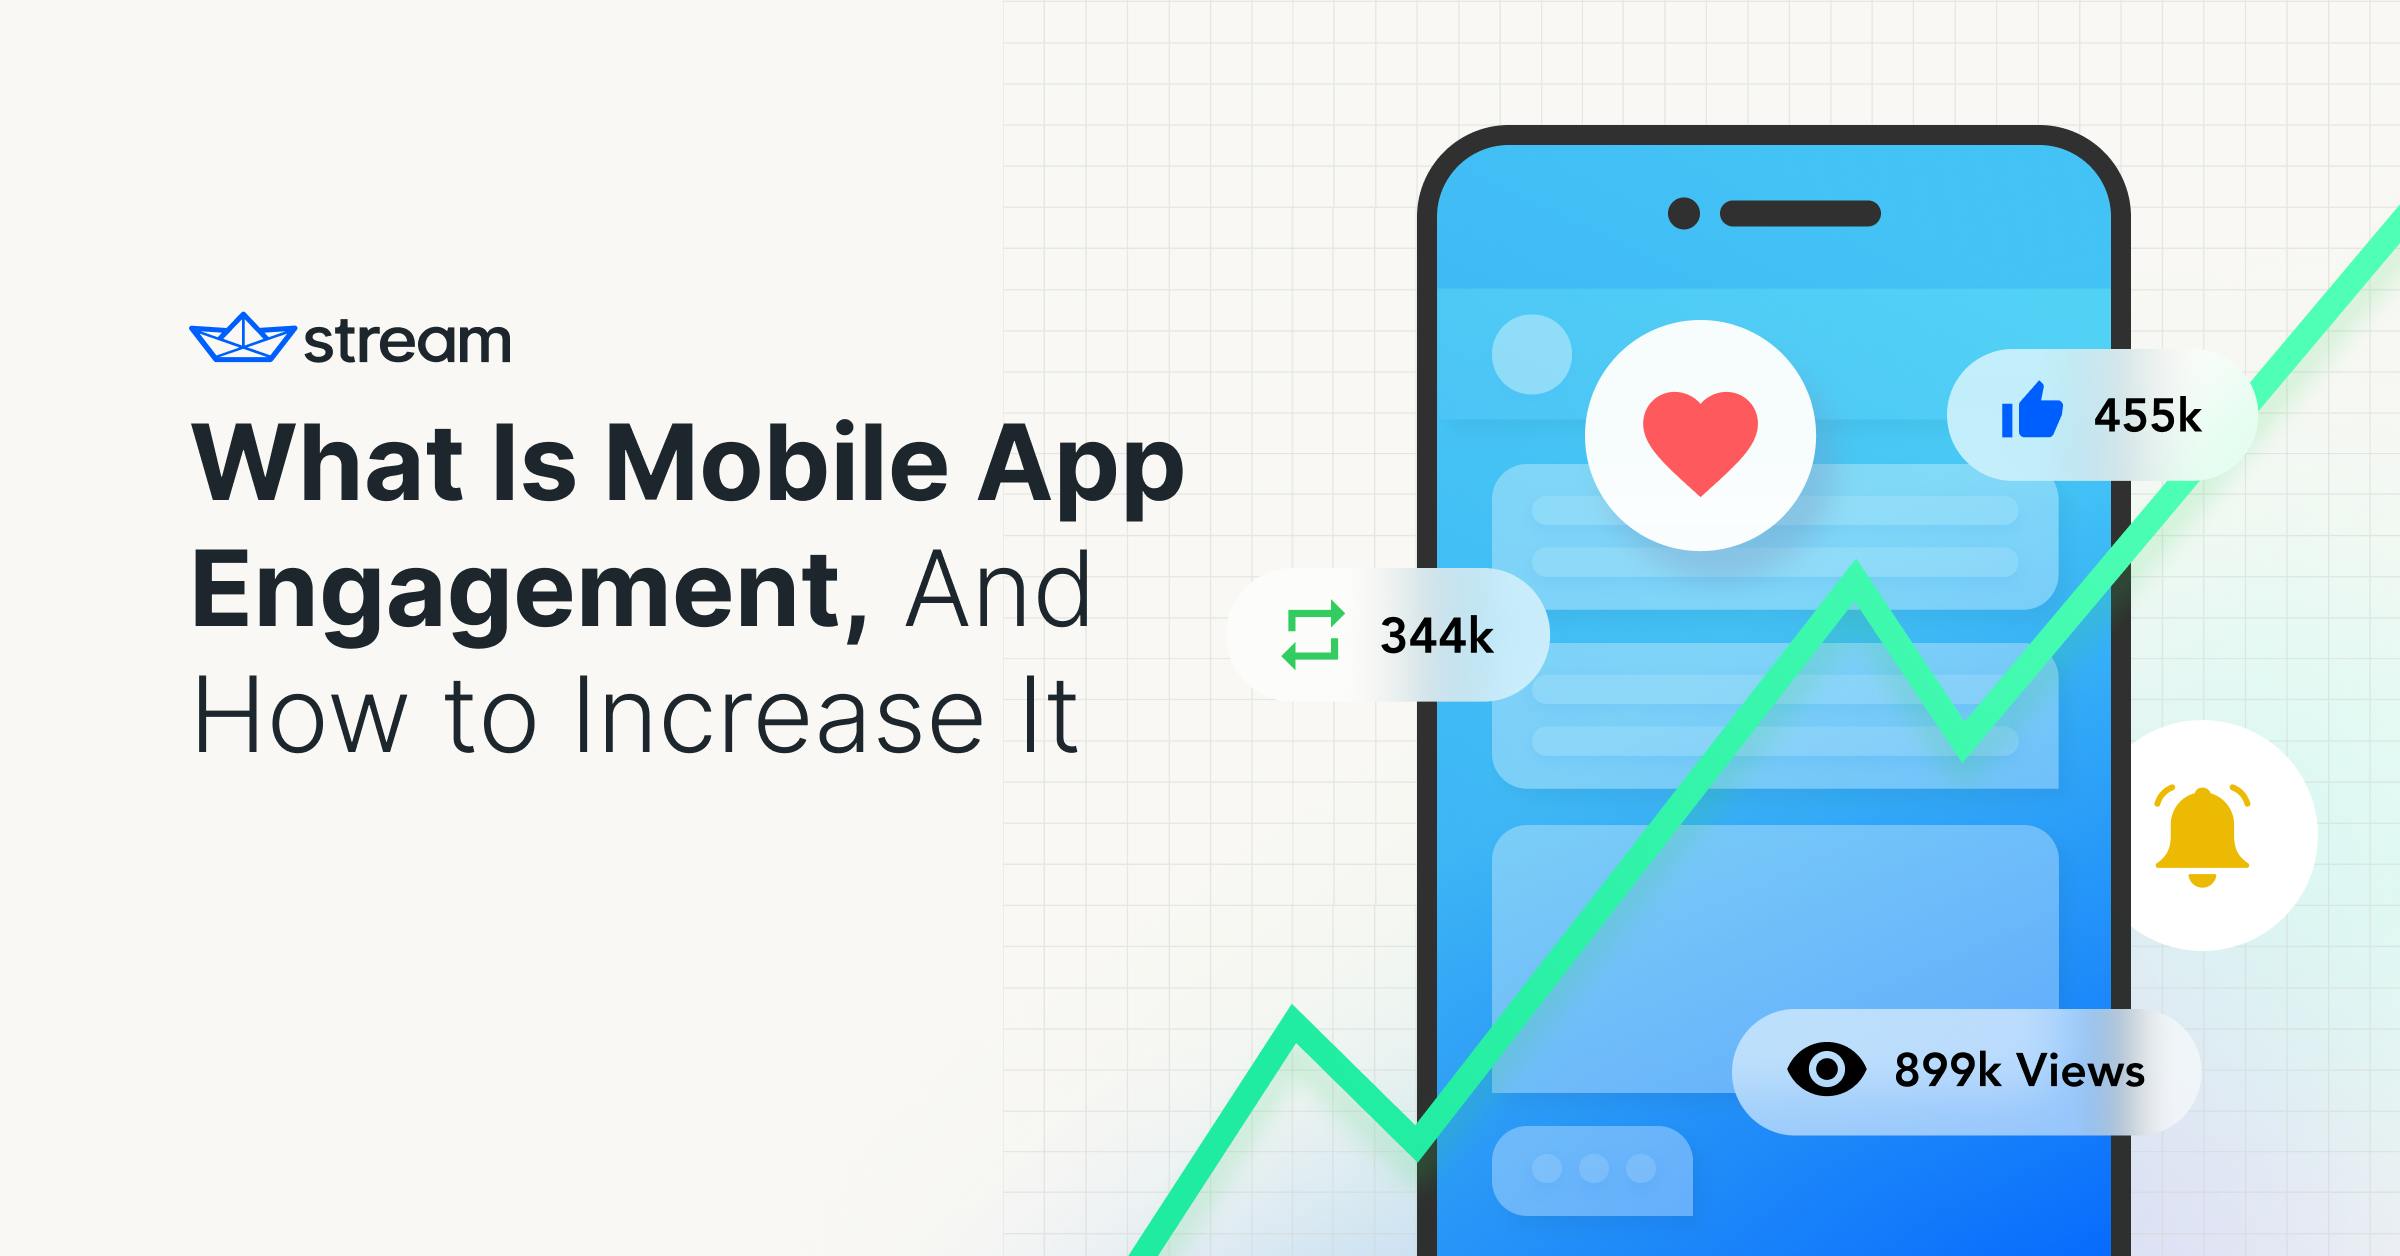 Mobile app engagement